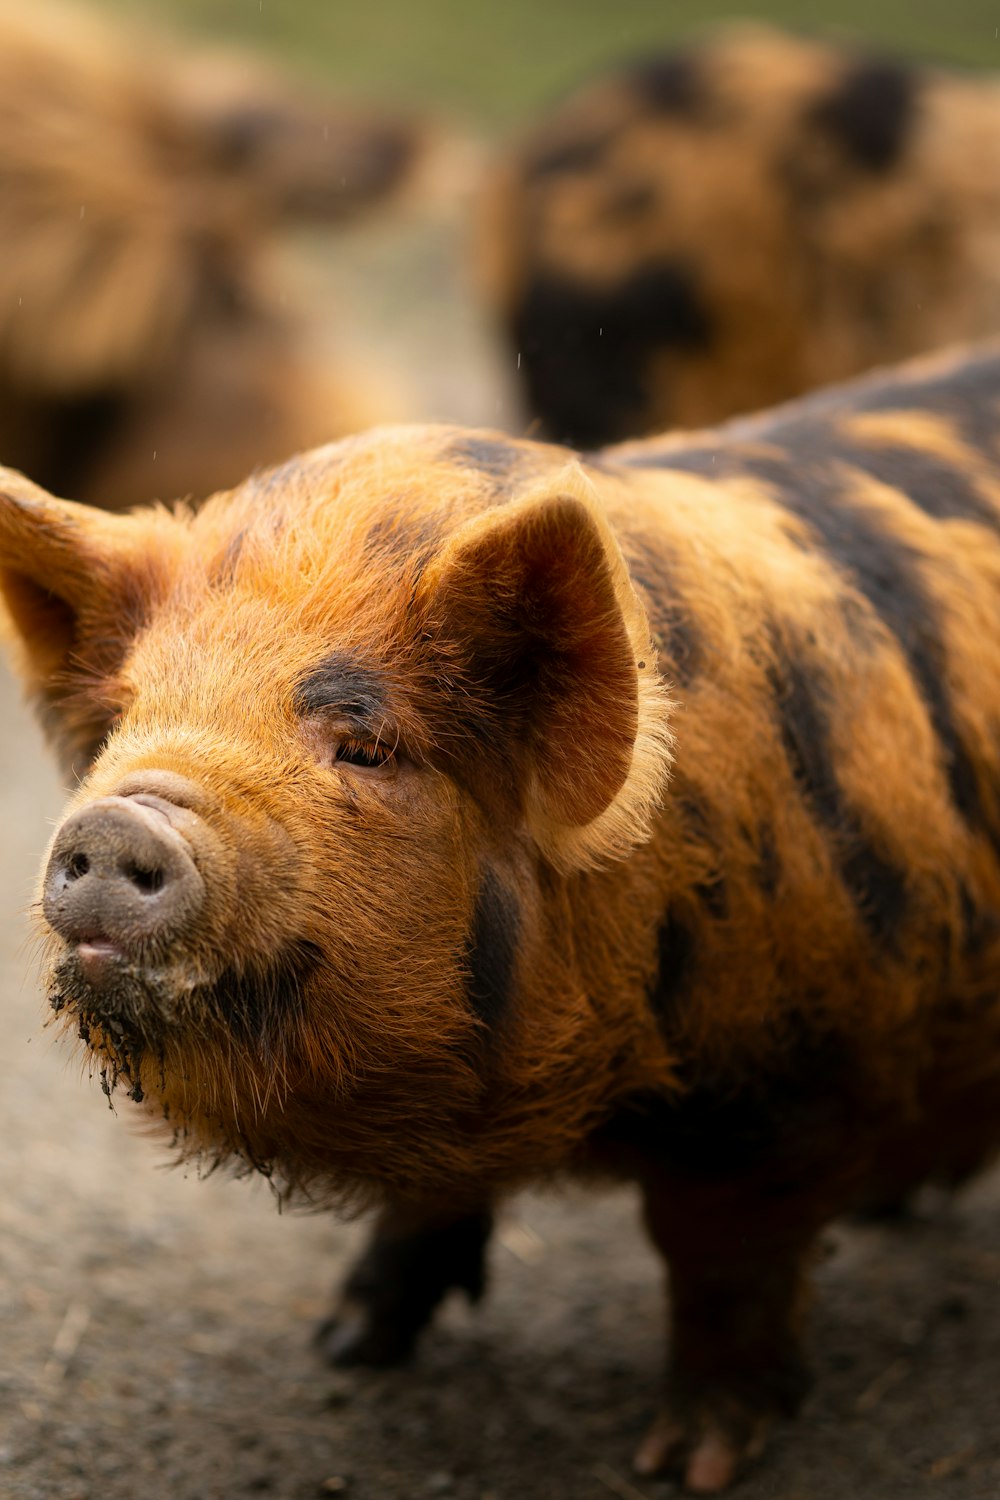 a close up of a pig on a dirt ground